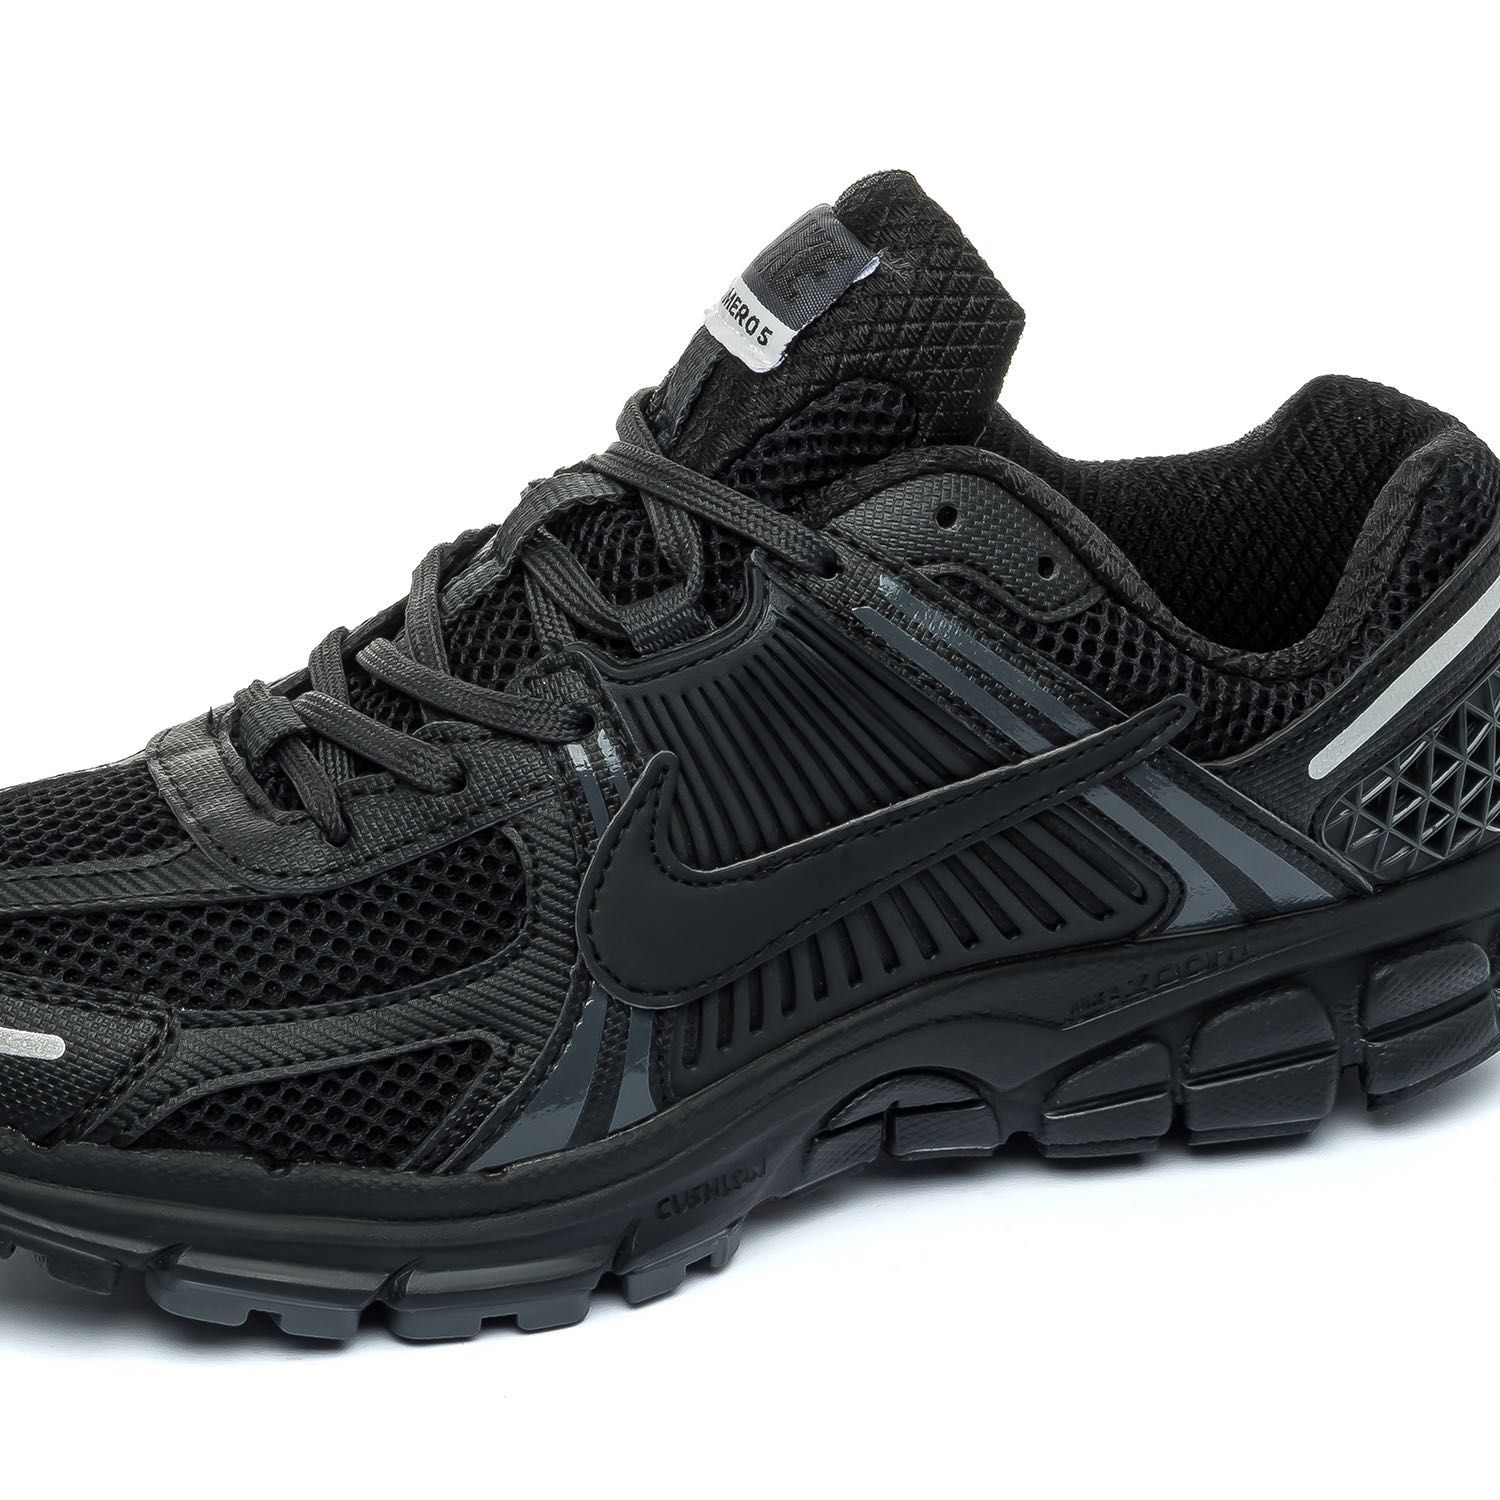 Мужские кроссовки Nike Zoom Vomero 5 Black. Размеры 41-45